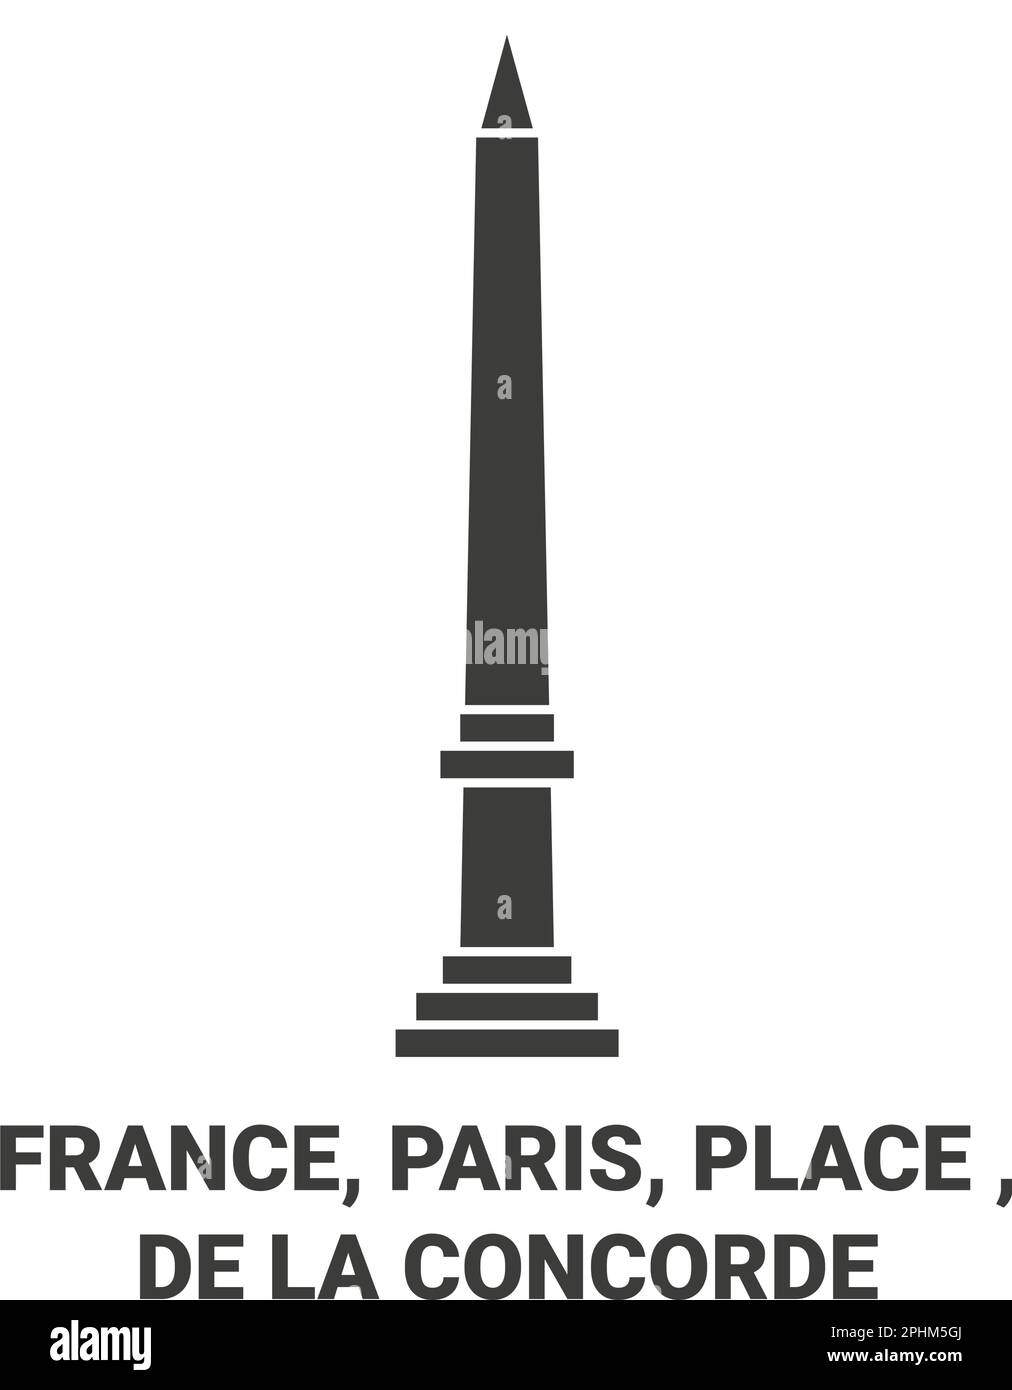 Frankreich, Paris, Place, De La Concorde Reise Landmark Vektordarstellung Stock Vektor